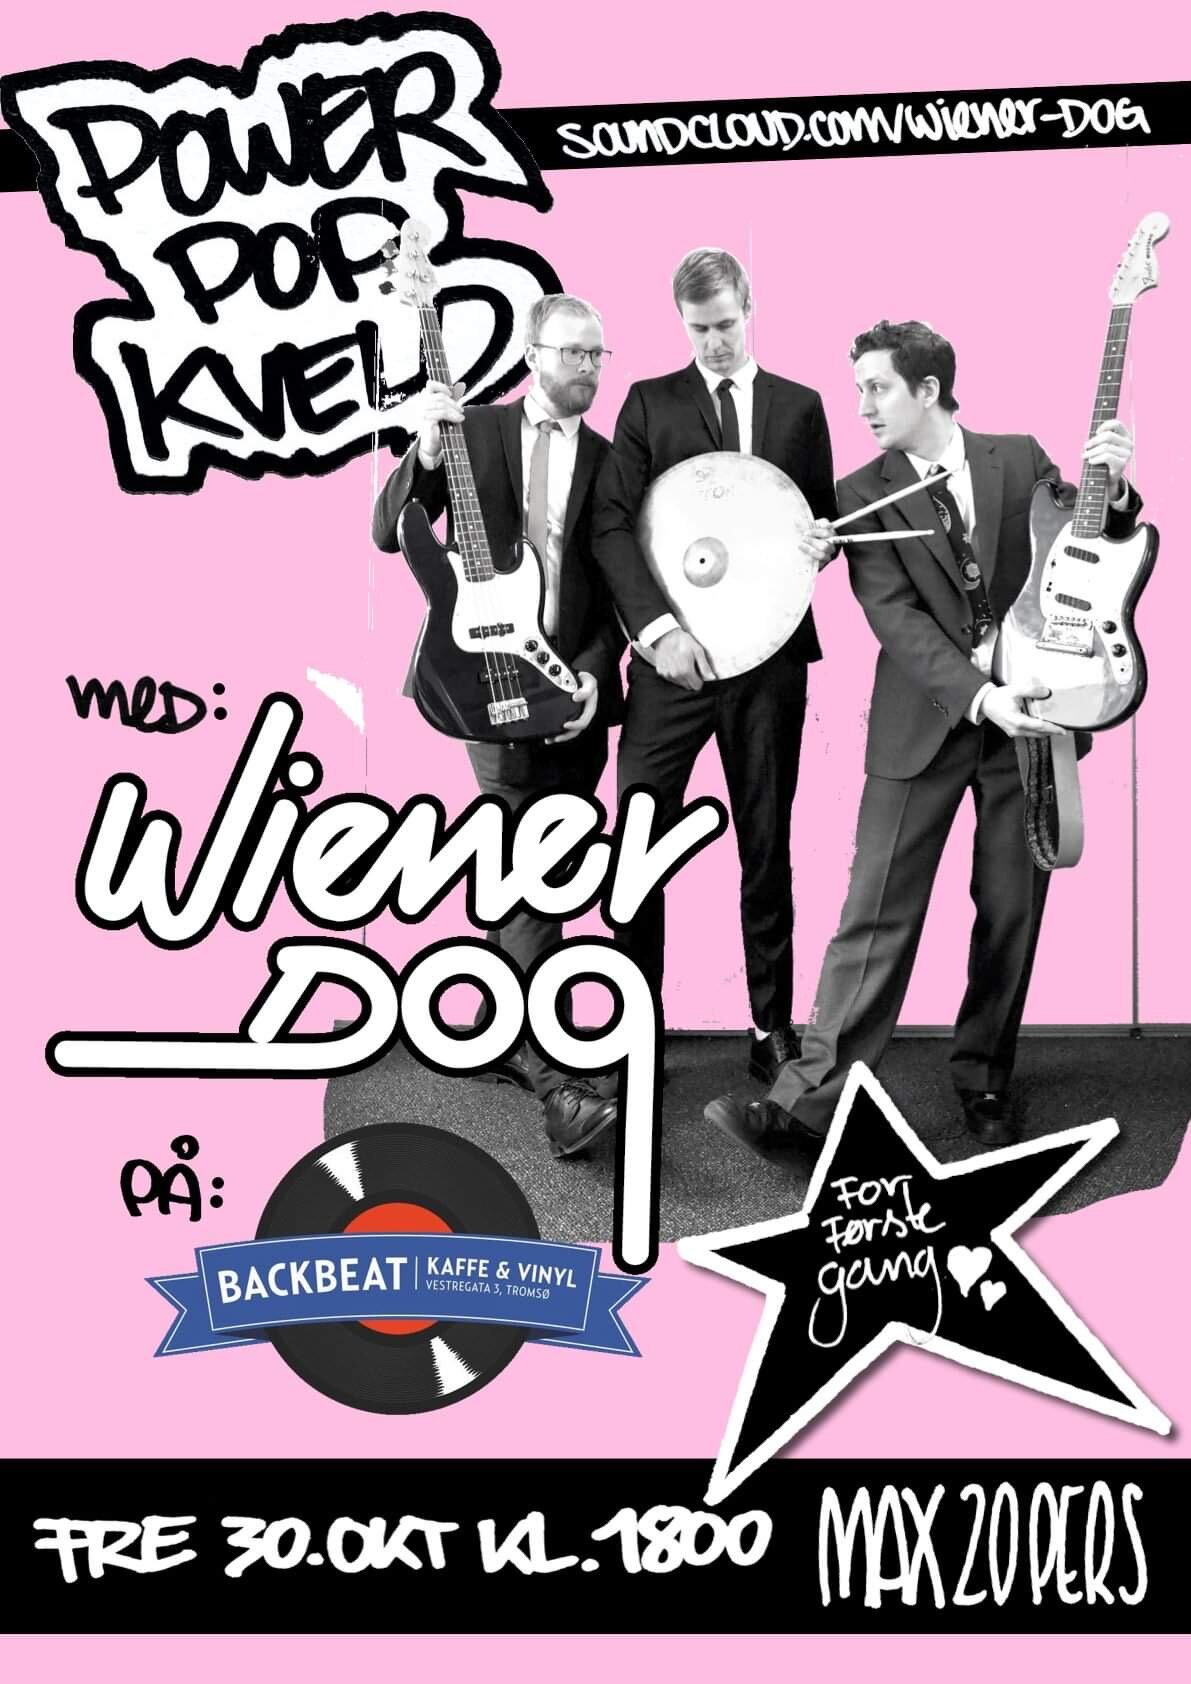 Wiener Dog Poster.jpg